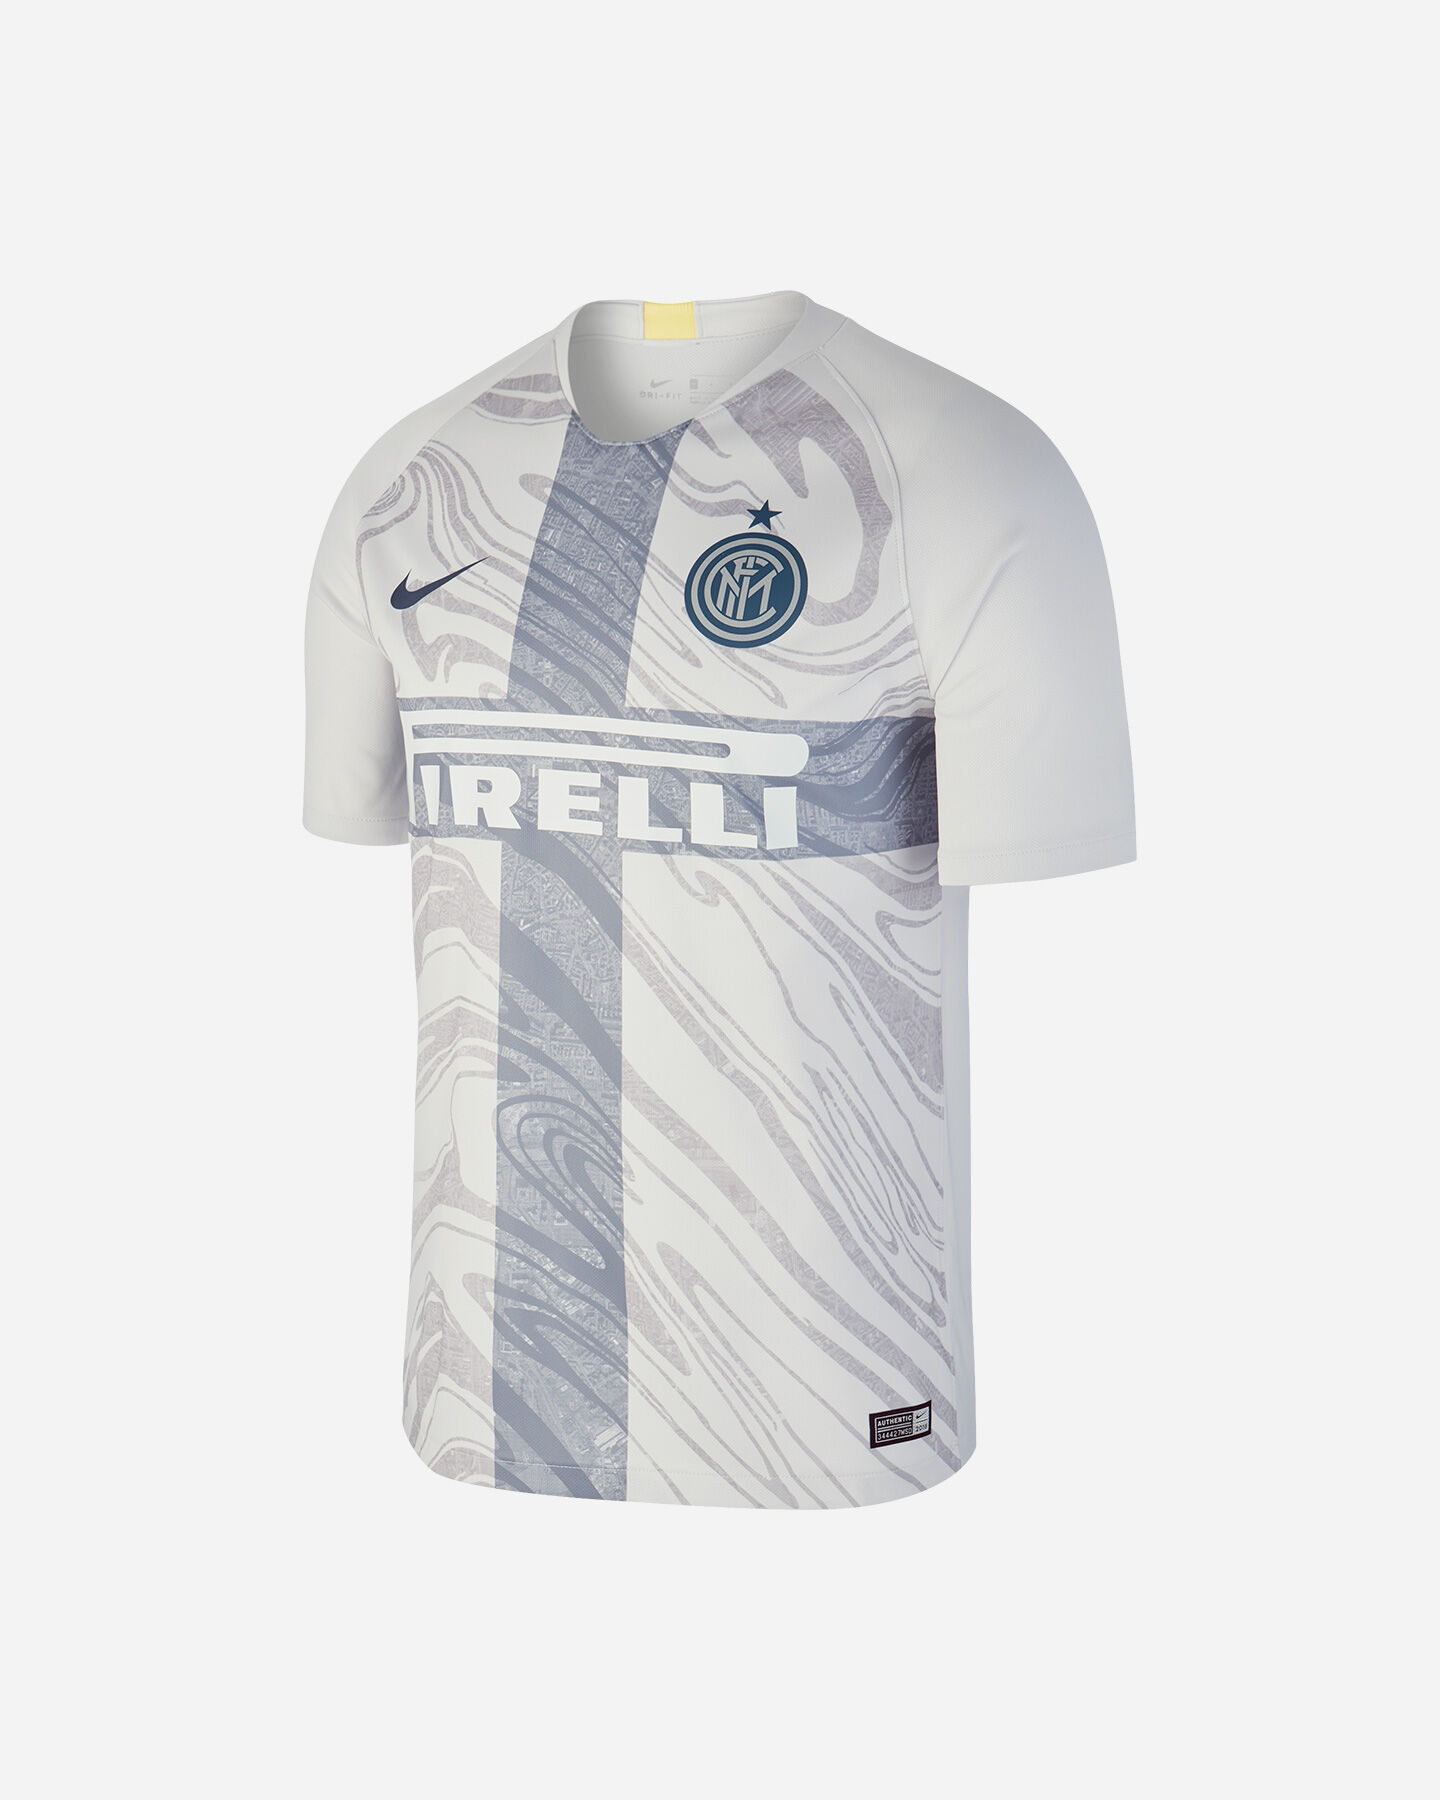 Seconda Maglia Inter Milan merchandising